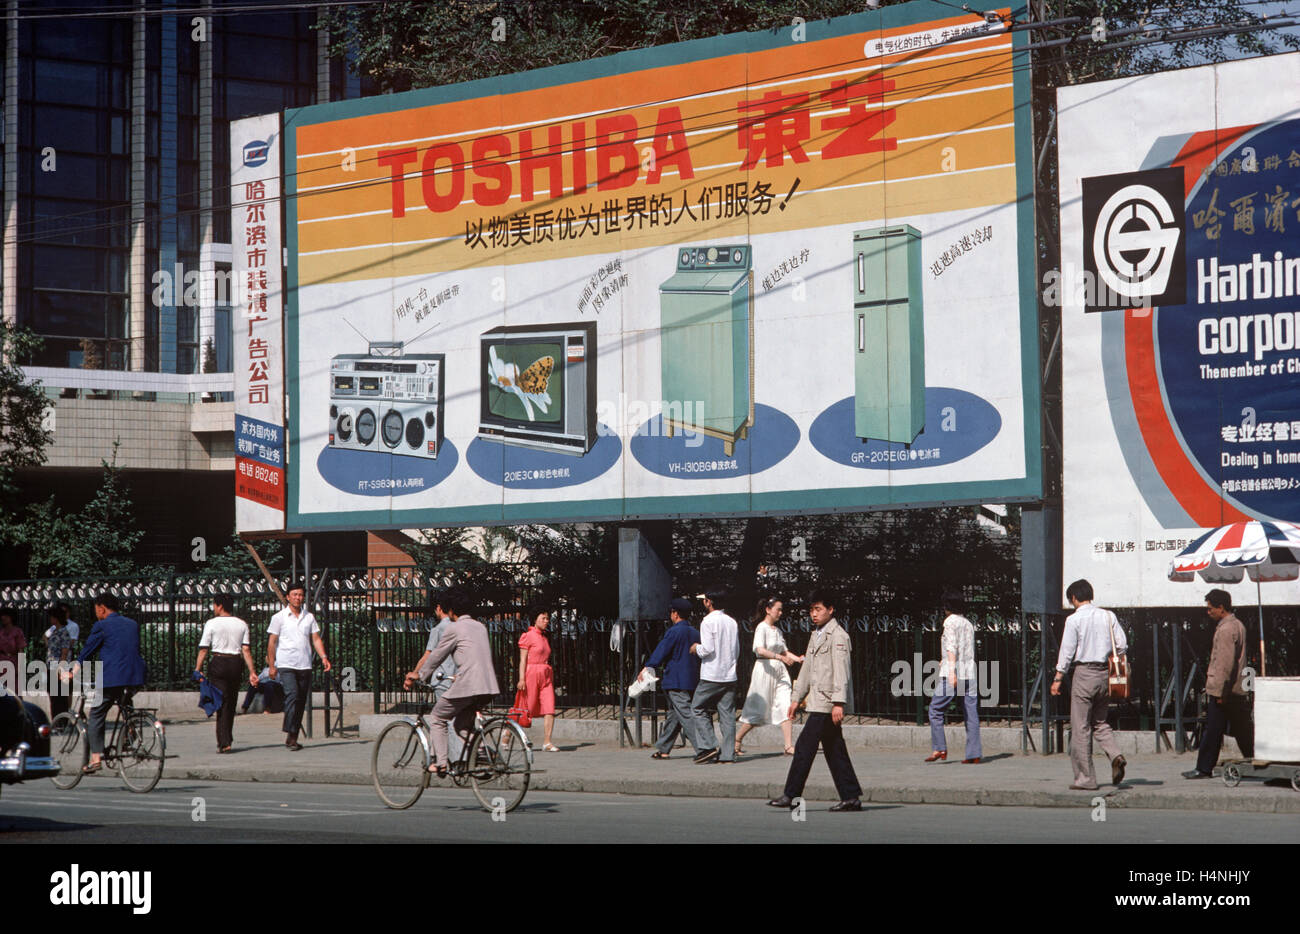 Toshiba washing machines and electrical goods advertising sign, Harbin, Heilongjiang Province, China Stock Photo